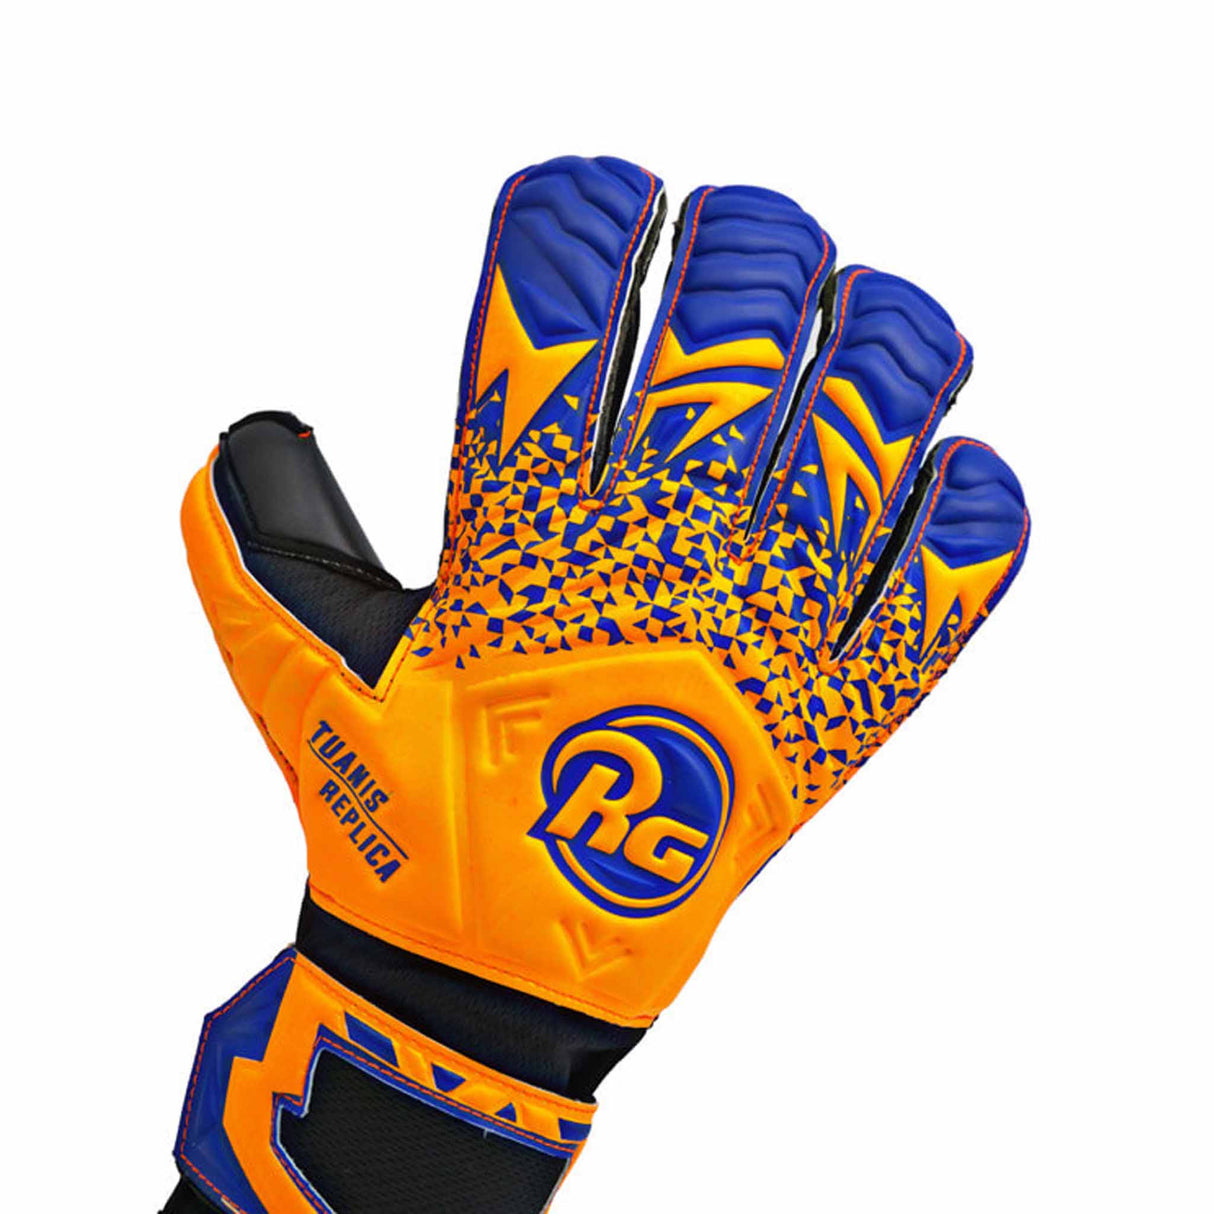 RG Goalkeeper gloves Tuanis Replica gants de gardien de but de soccer - Orange / Bleu